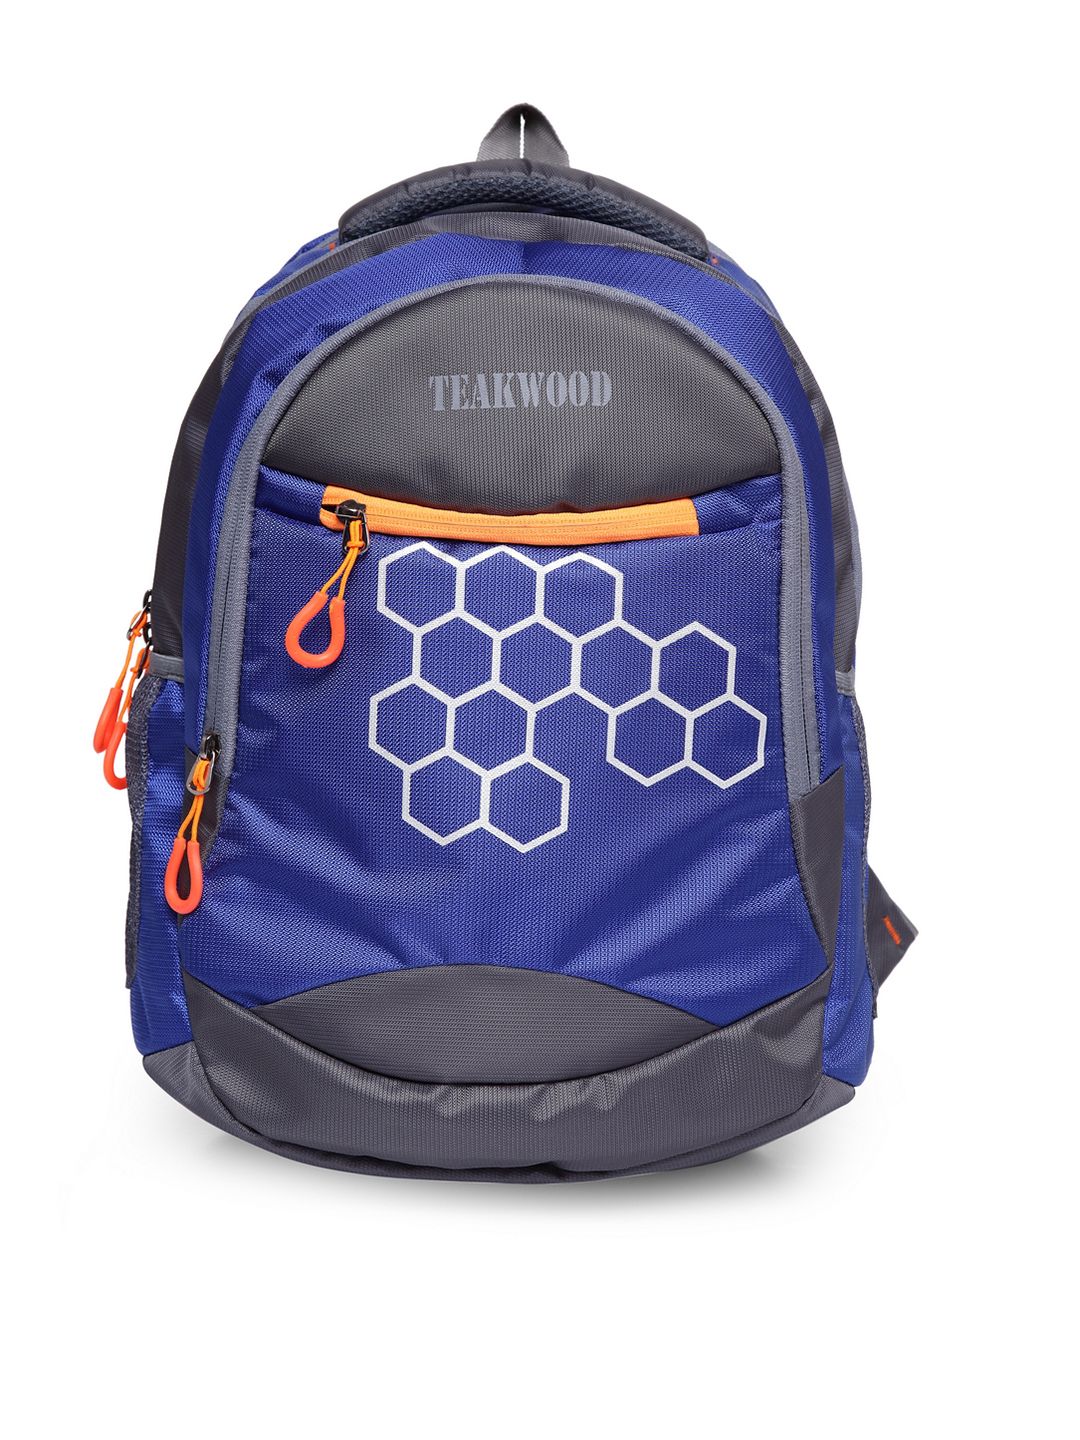 Teakwood Leathers Unisex Blue & Grey Geometric Backpack Price in India